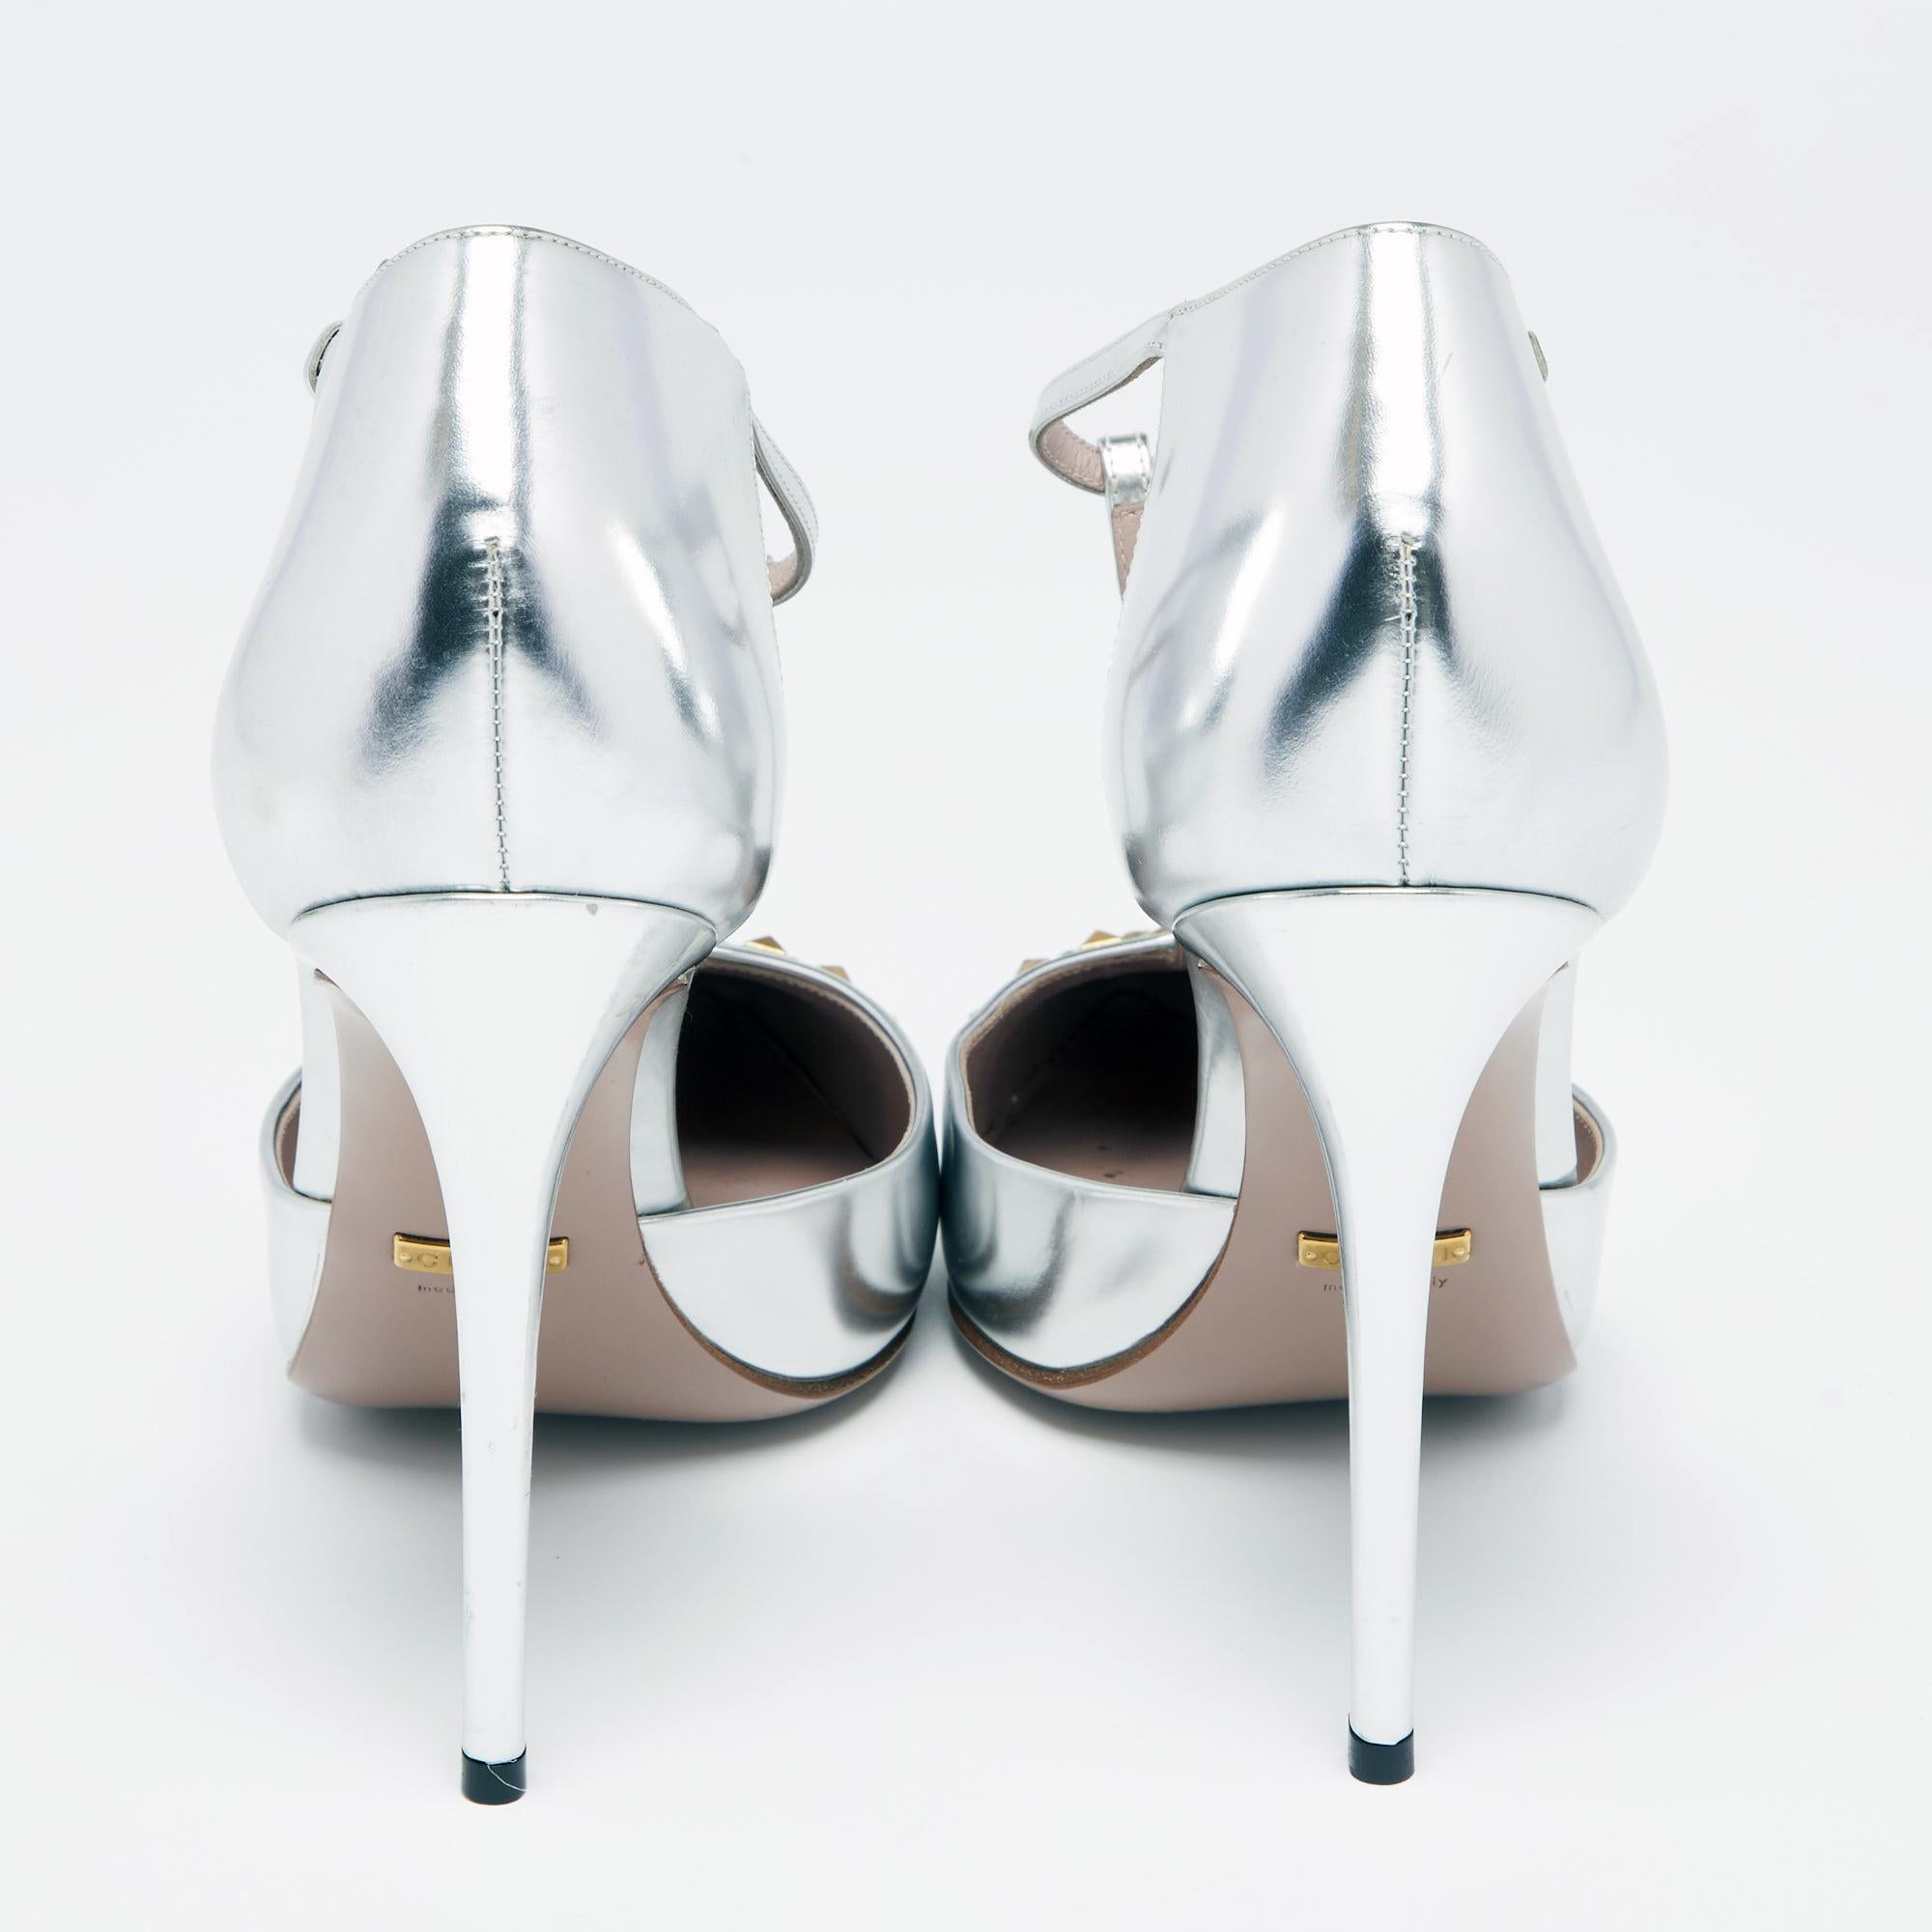 gucci silver heels